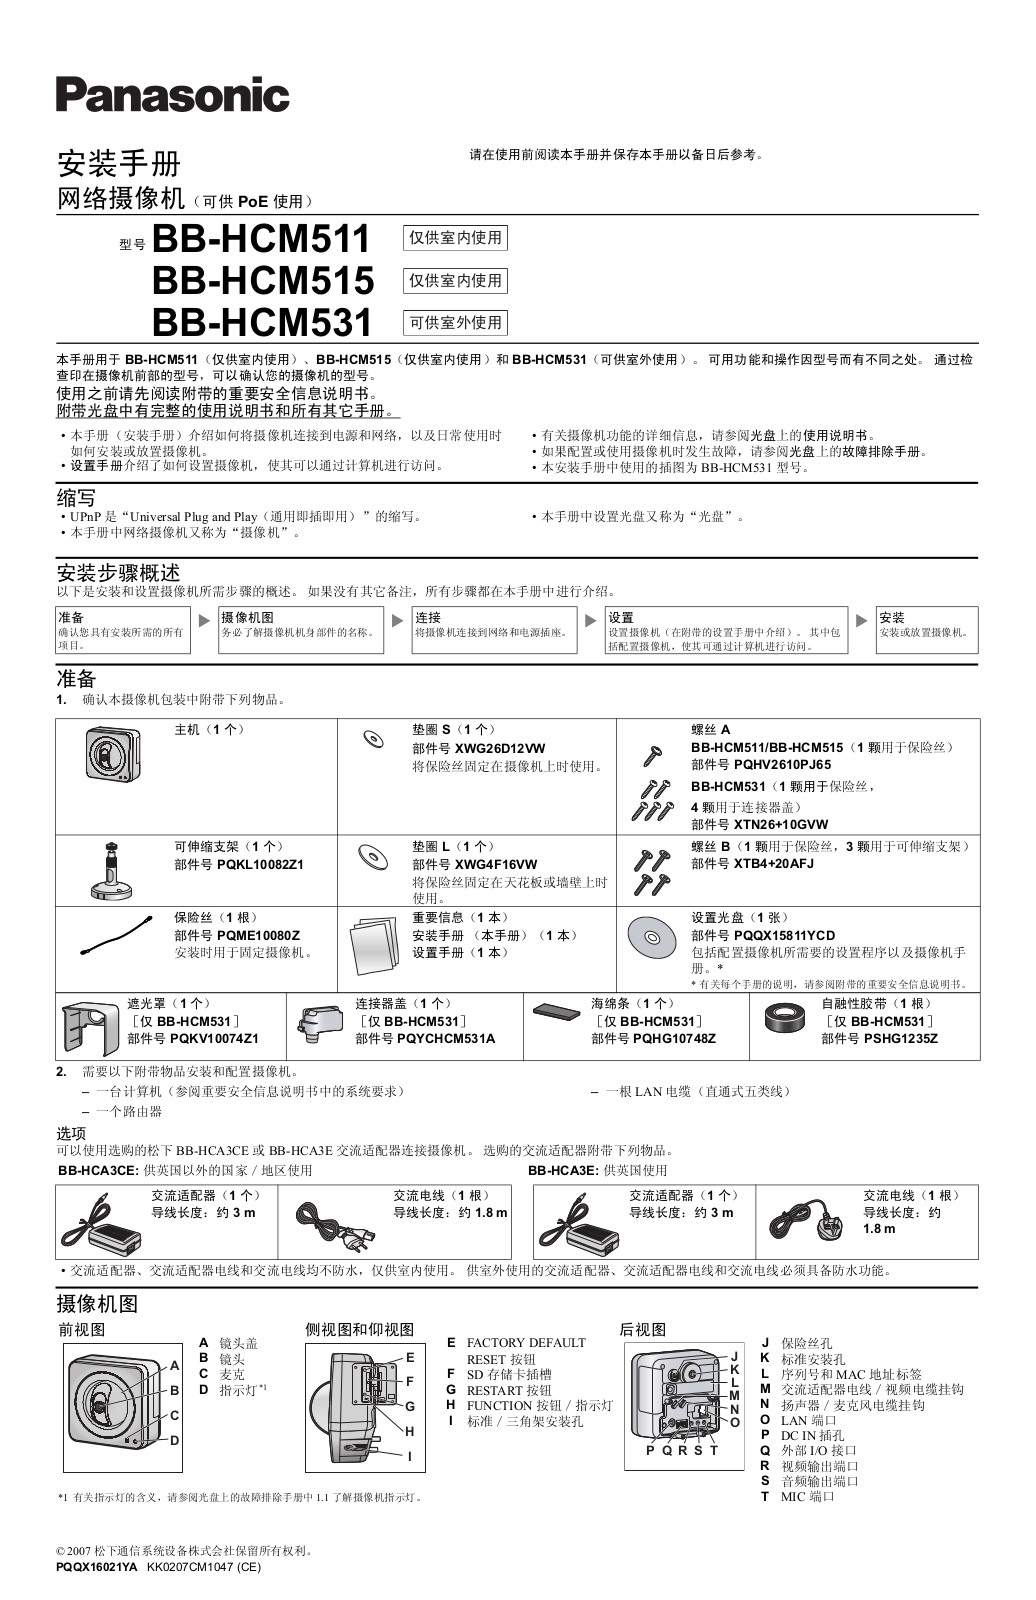 Panasonic BB-HCM511, BB-HCM515, BB-HCM531 installation Guide